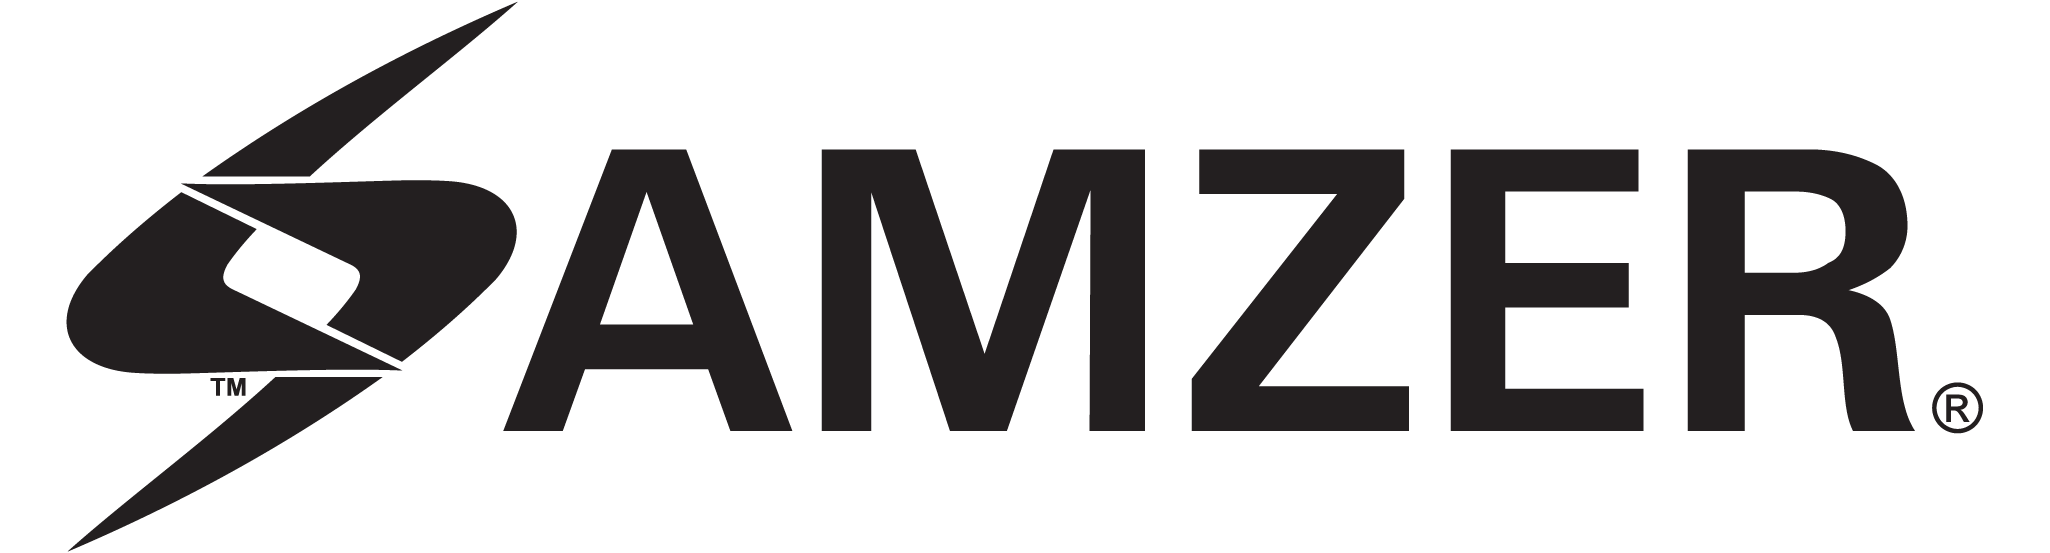 Amzer/Portfolio Case/Universal 7In